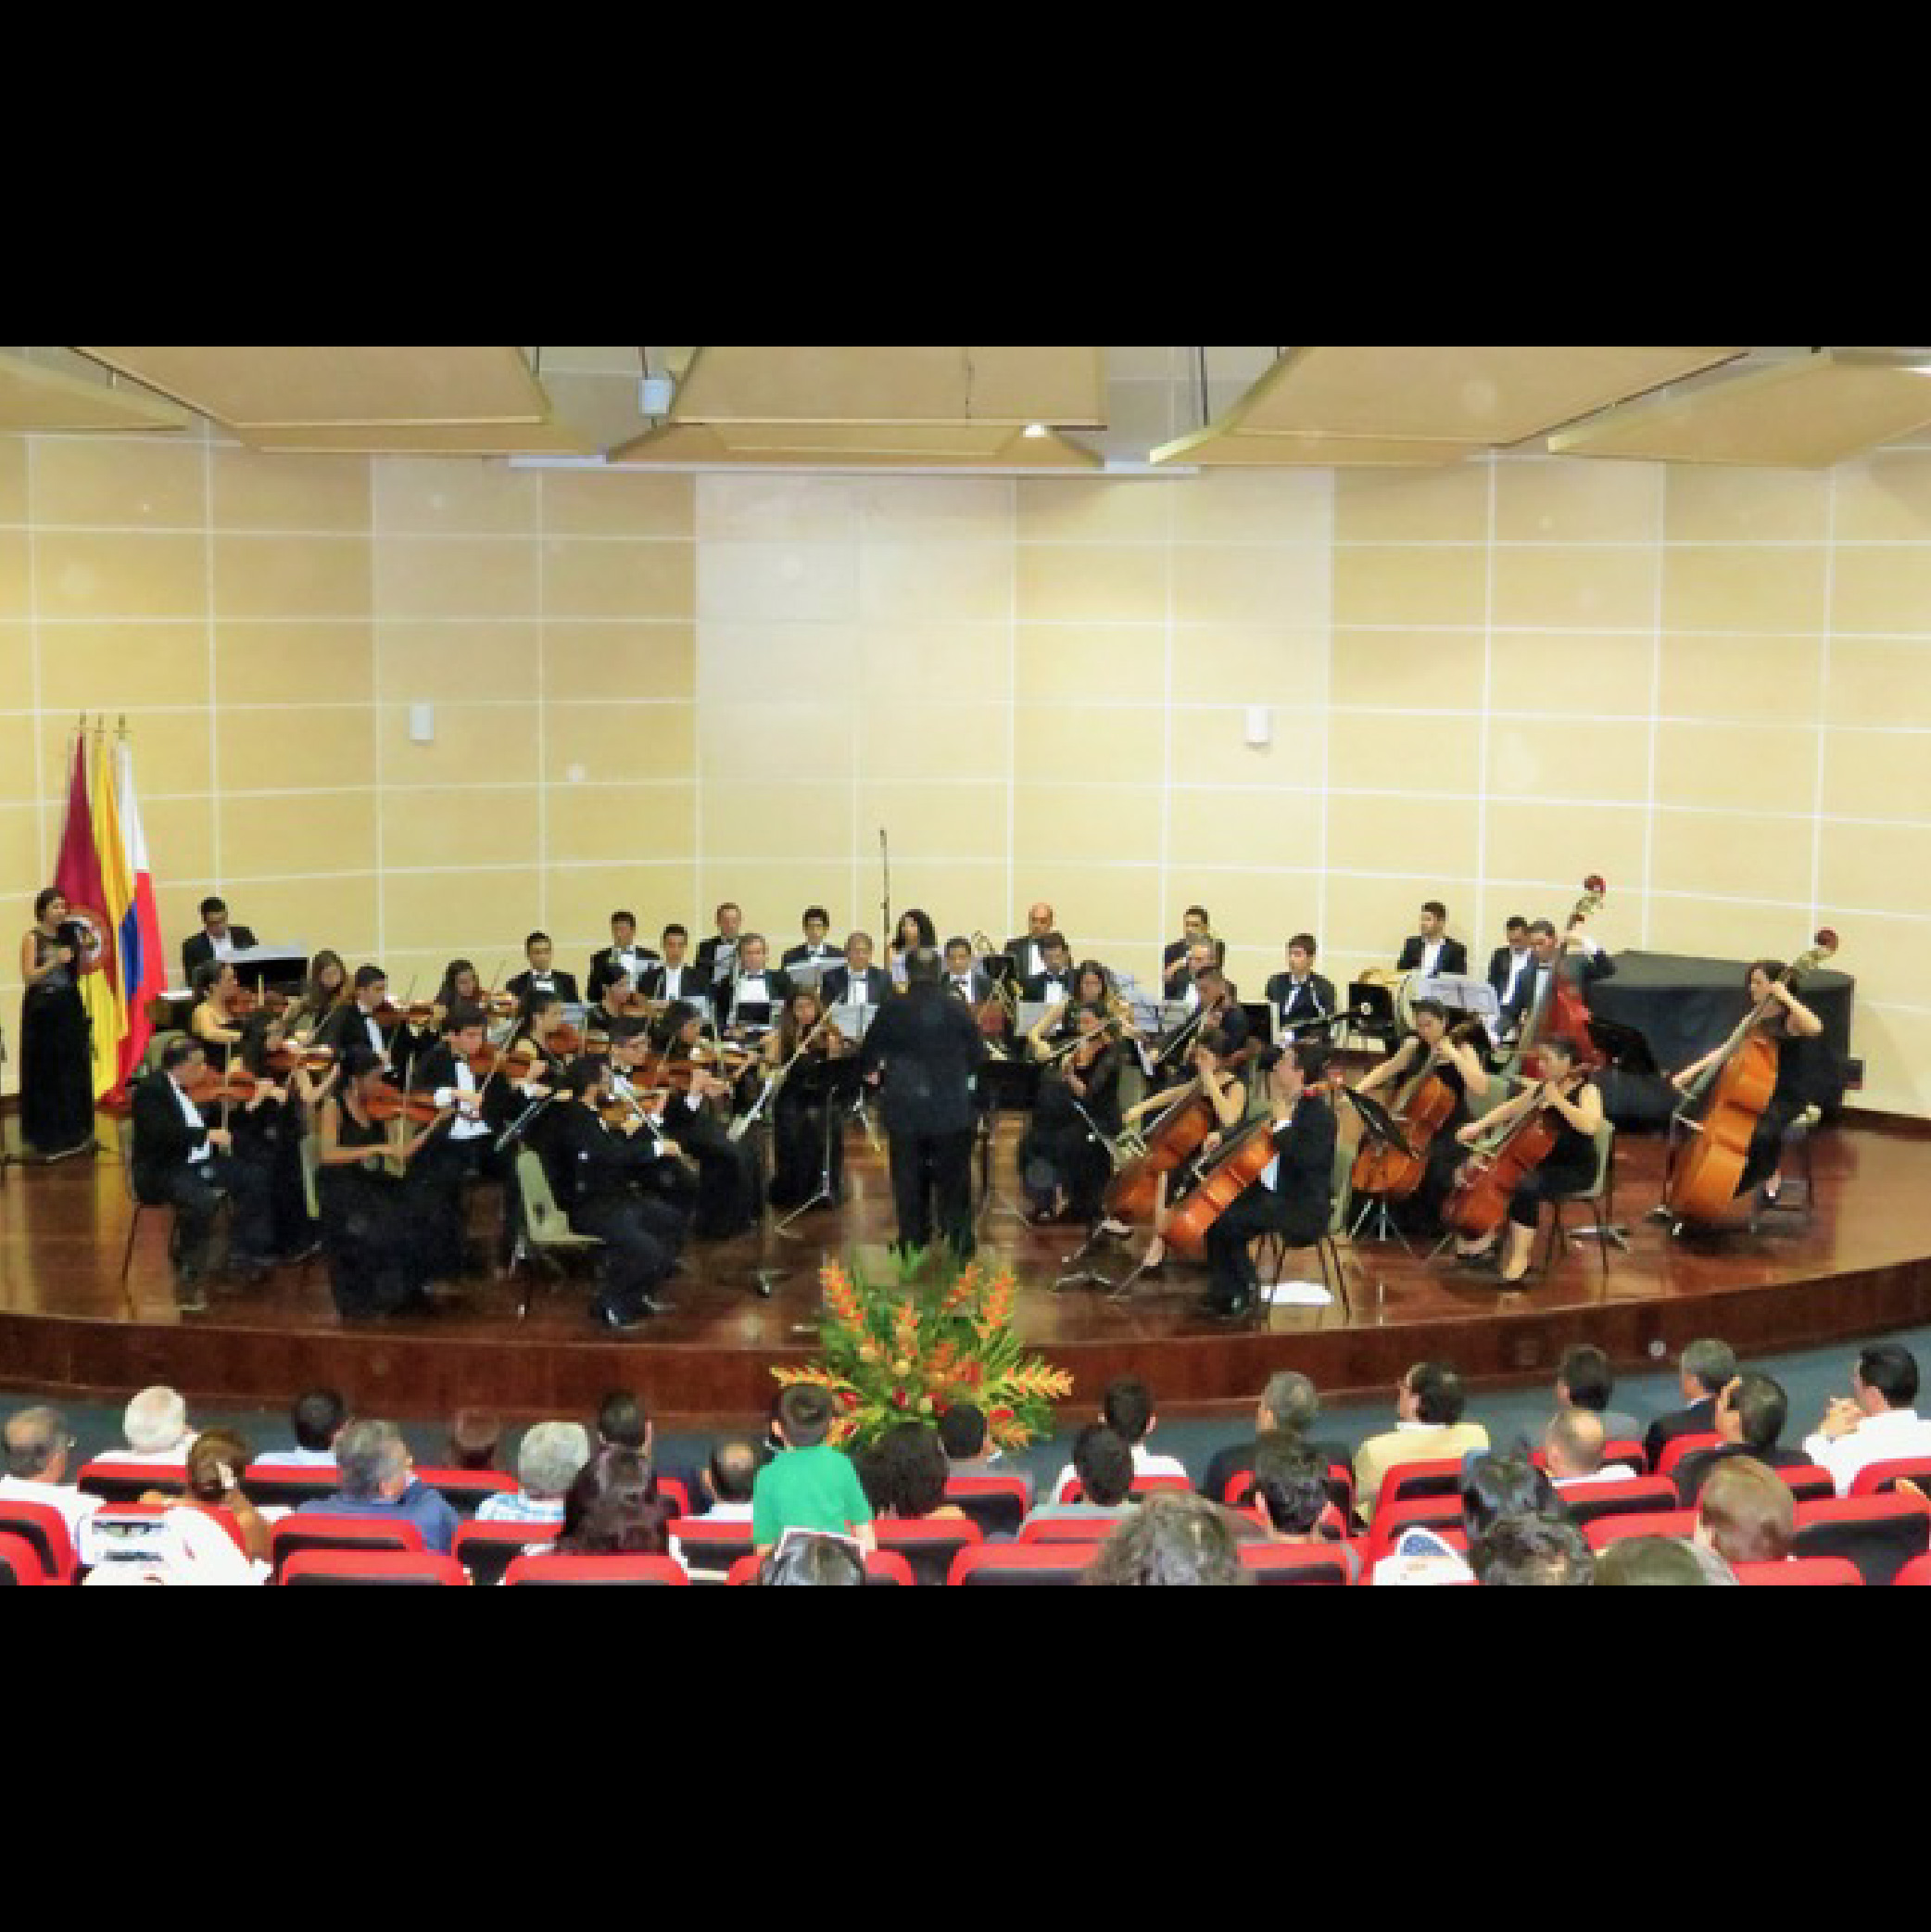 ArtistasIF22_UTOLIMA_Orquesta U tolima